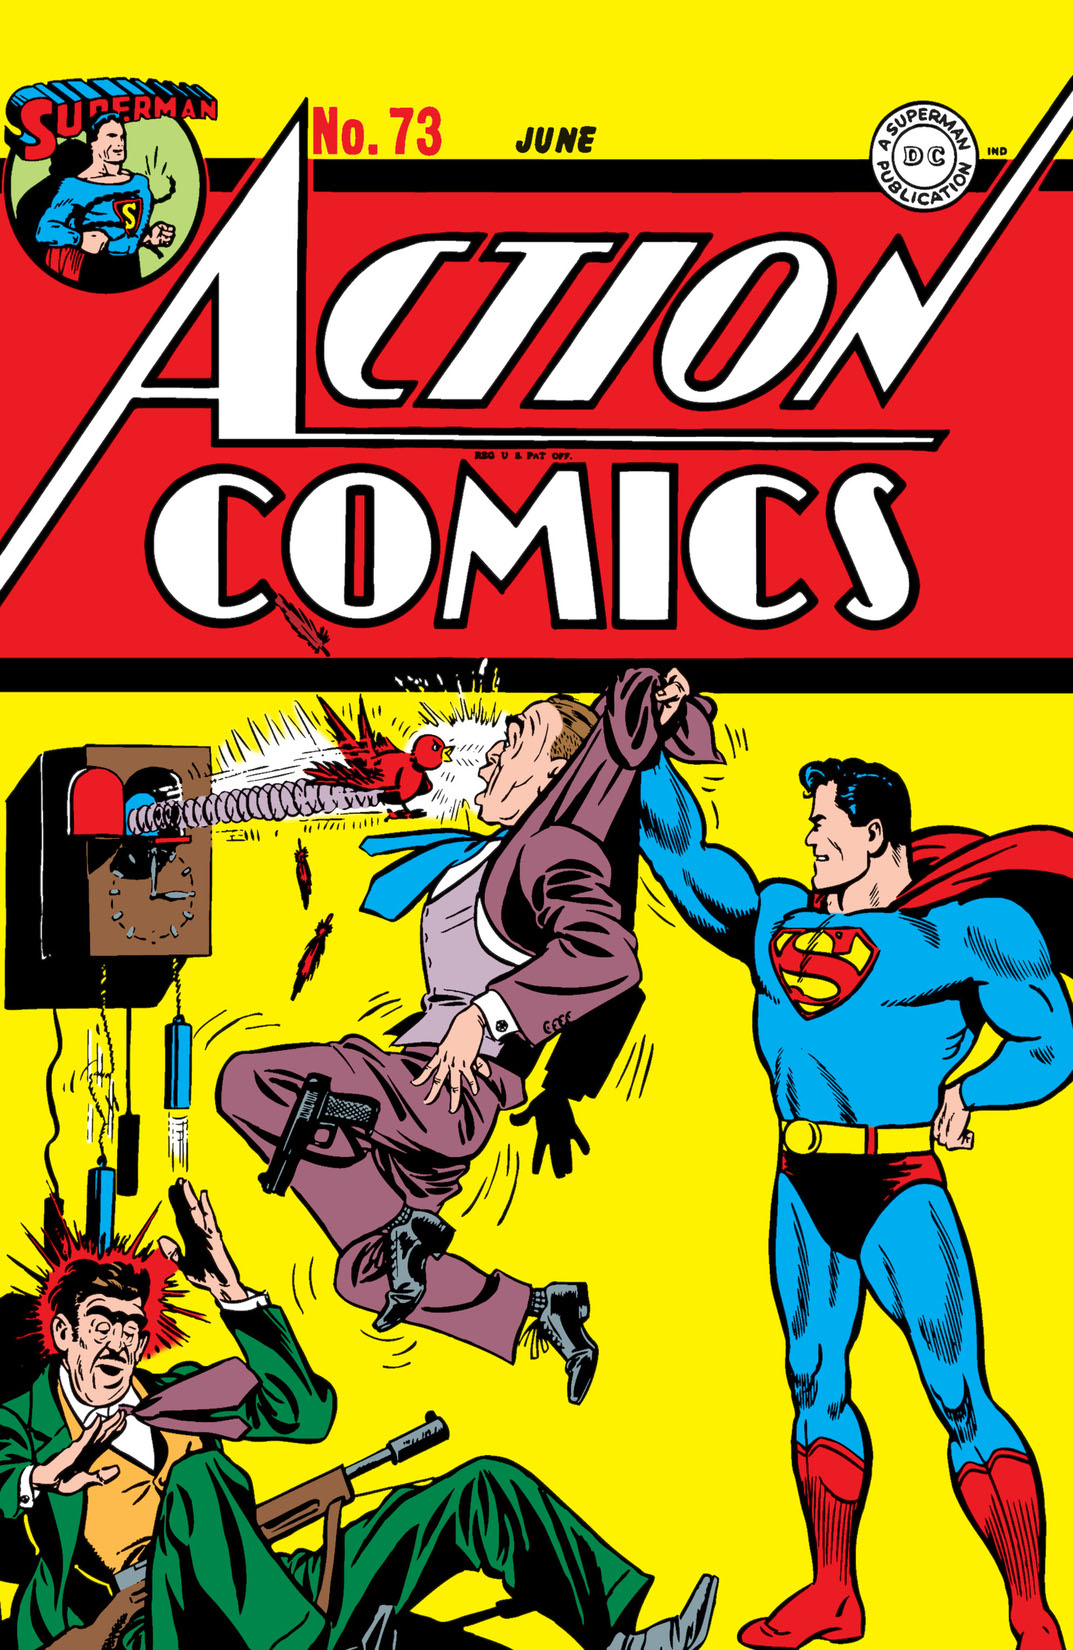 Action Comics (1938-) #73 preview images